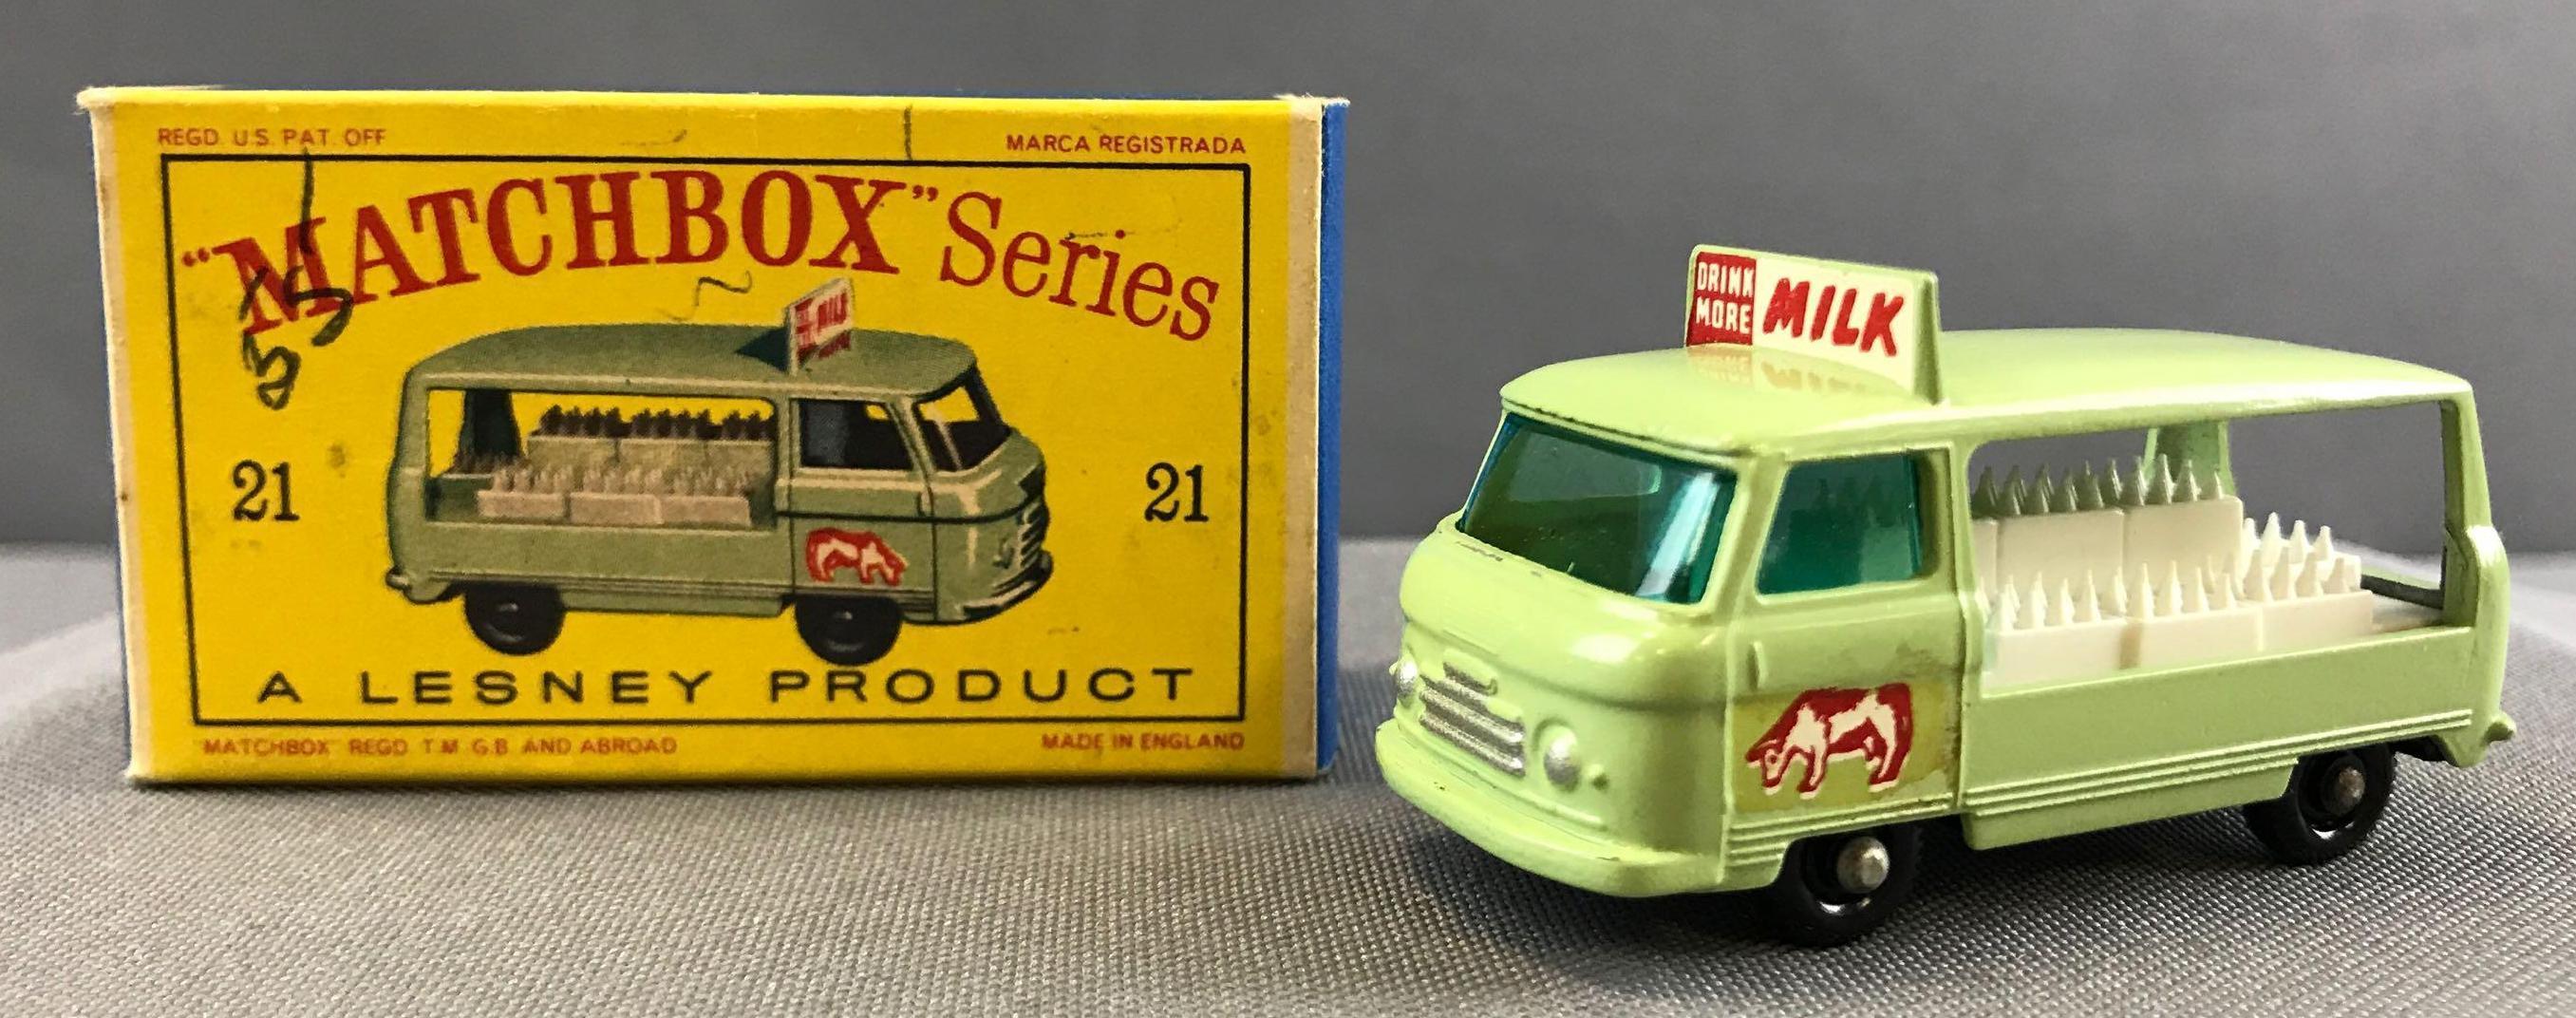 Matchbox No. 21 Commercial Bottle Float Truck die cast vehicle with Original Box